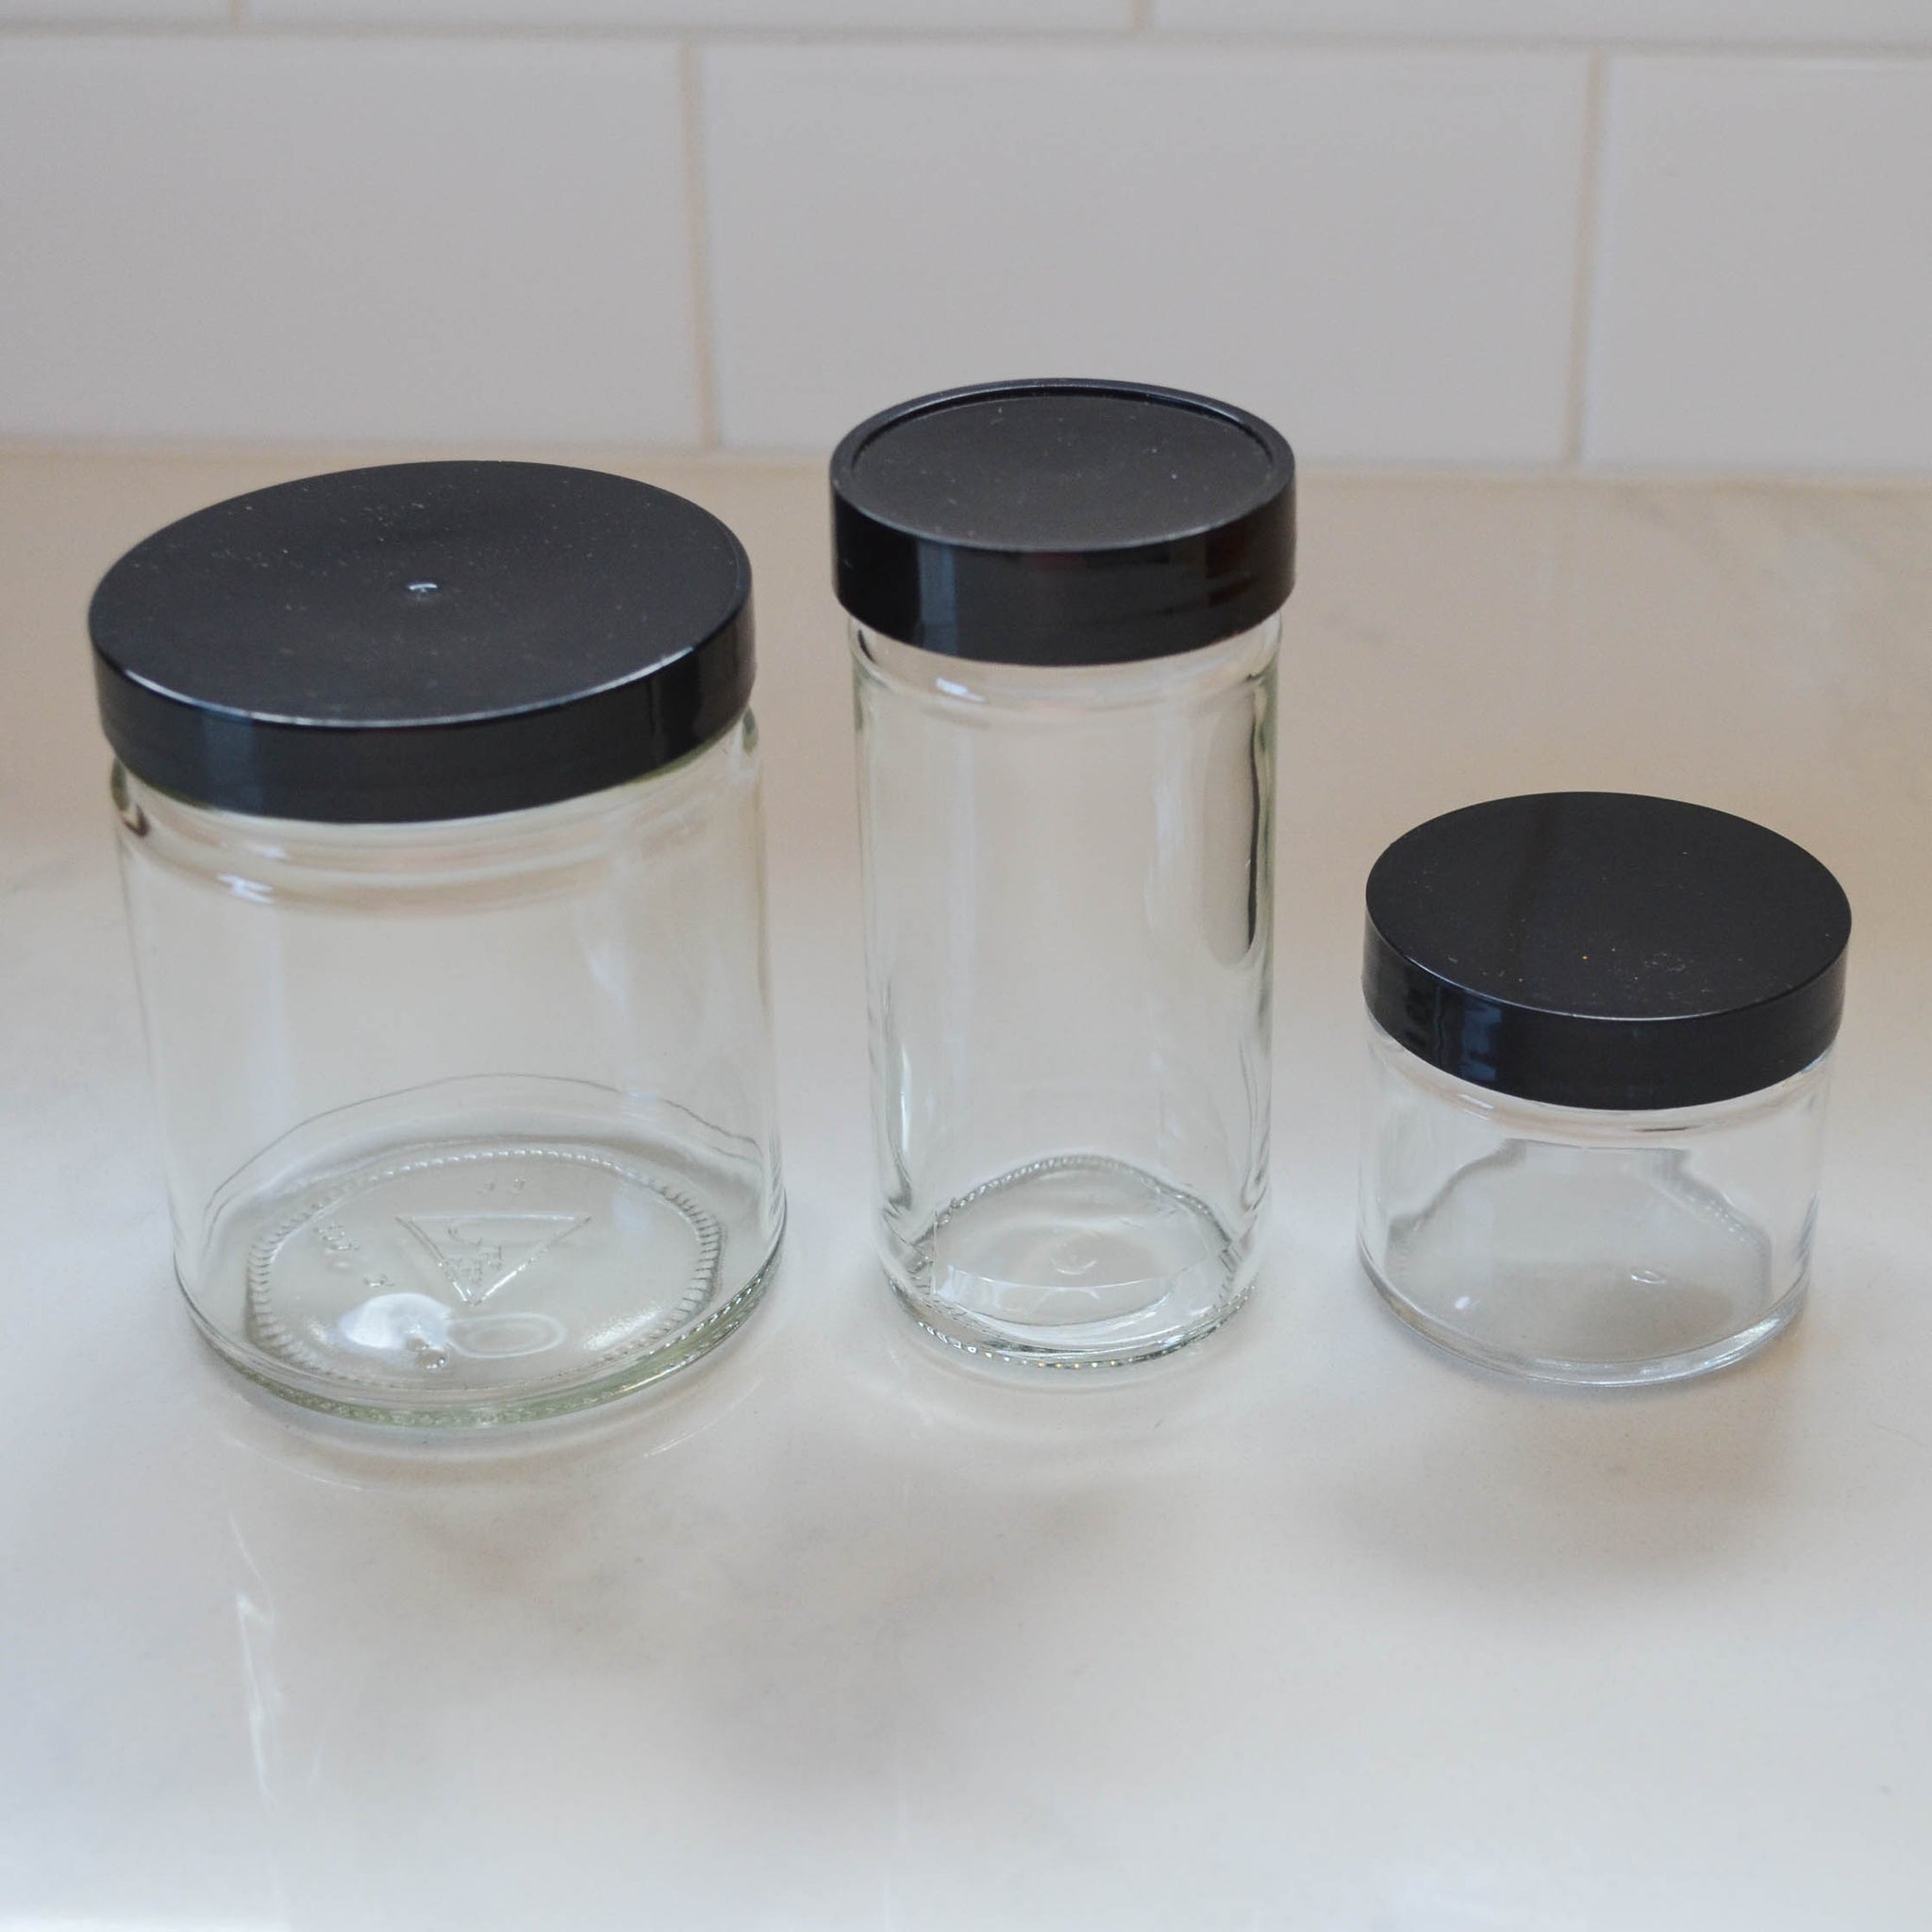 Etched Glass Spice Jar with Black Cap - Popcorn Seasoning, 1 Empty Jar